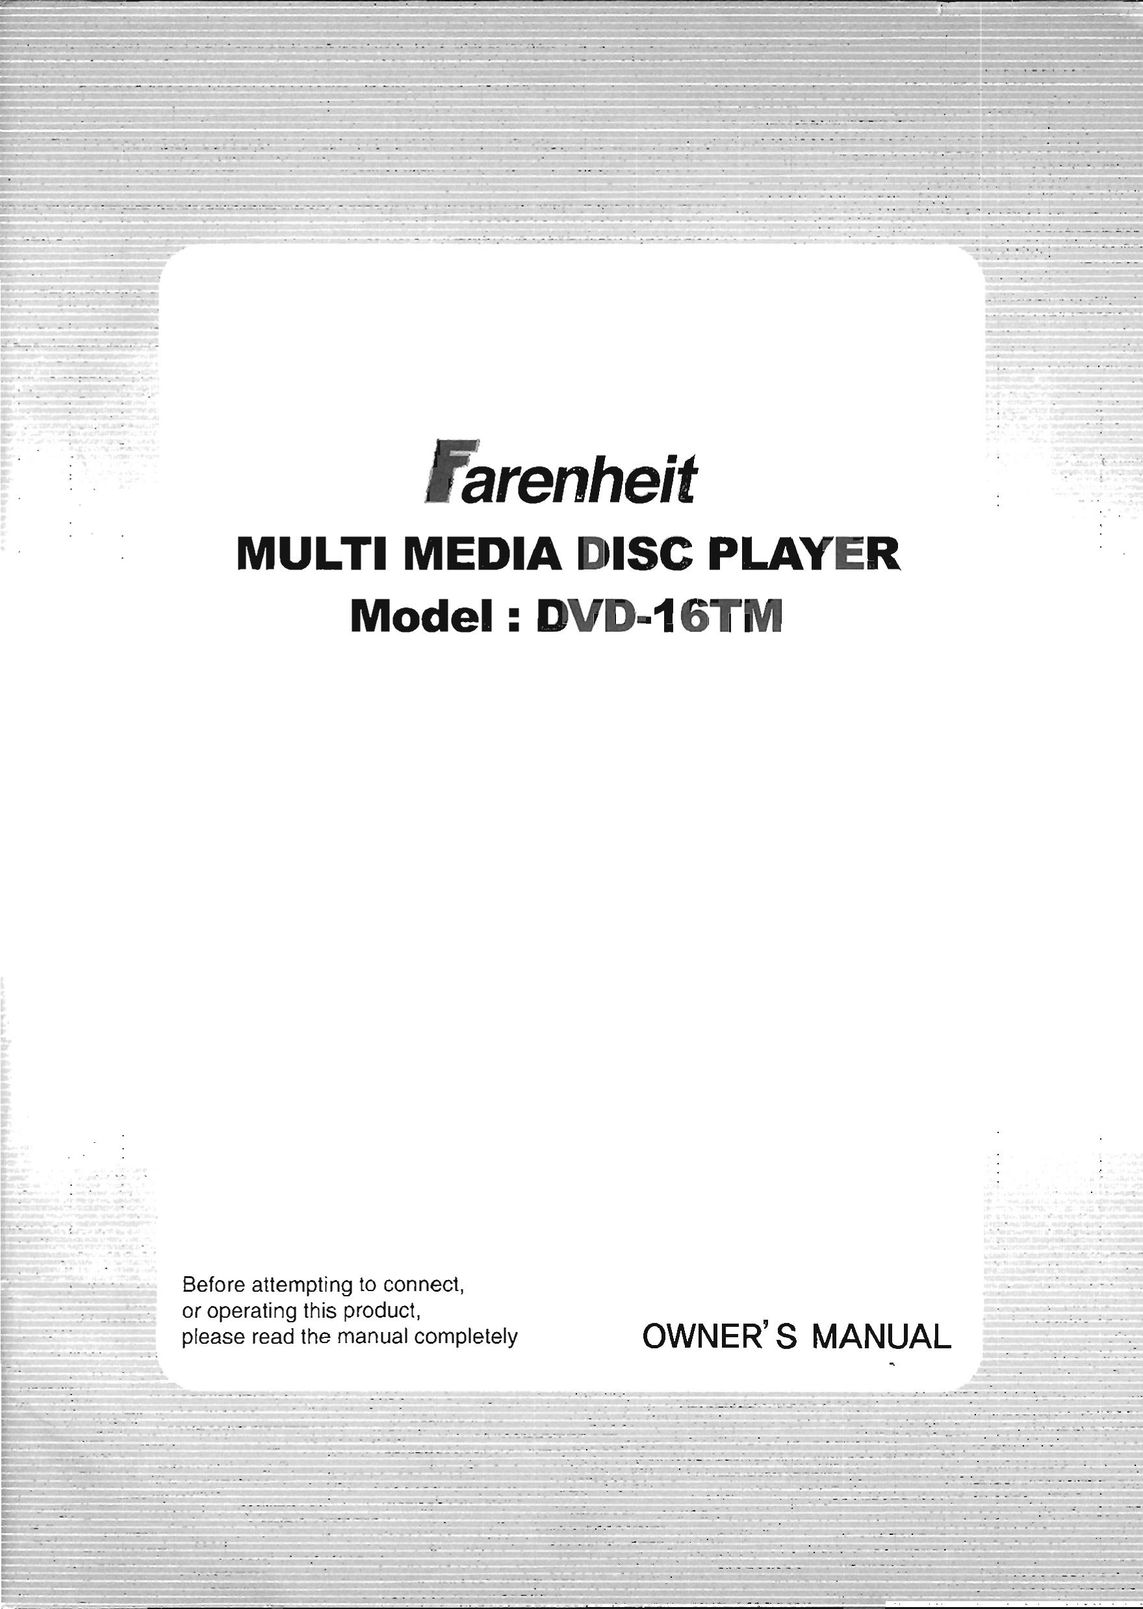 Farenheit Technologies DVD-16TM CD Player User Manual